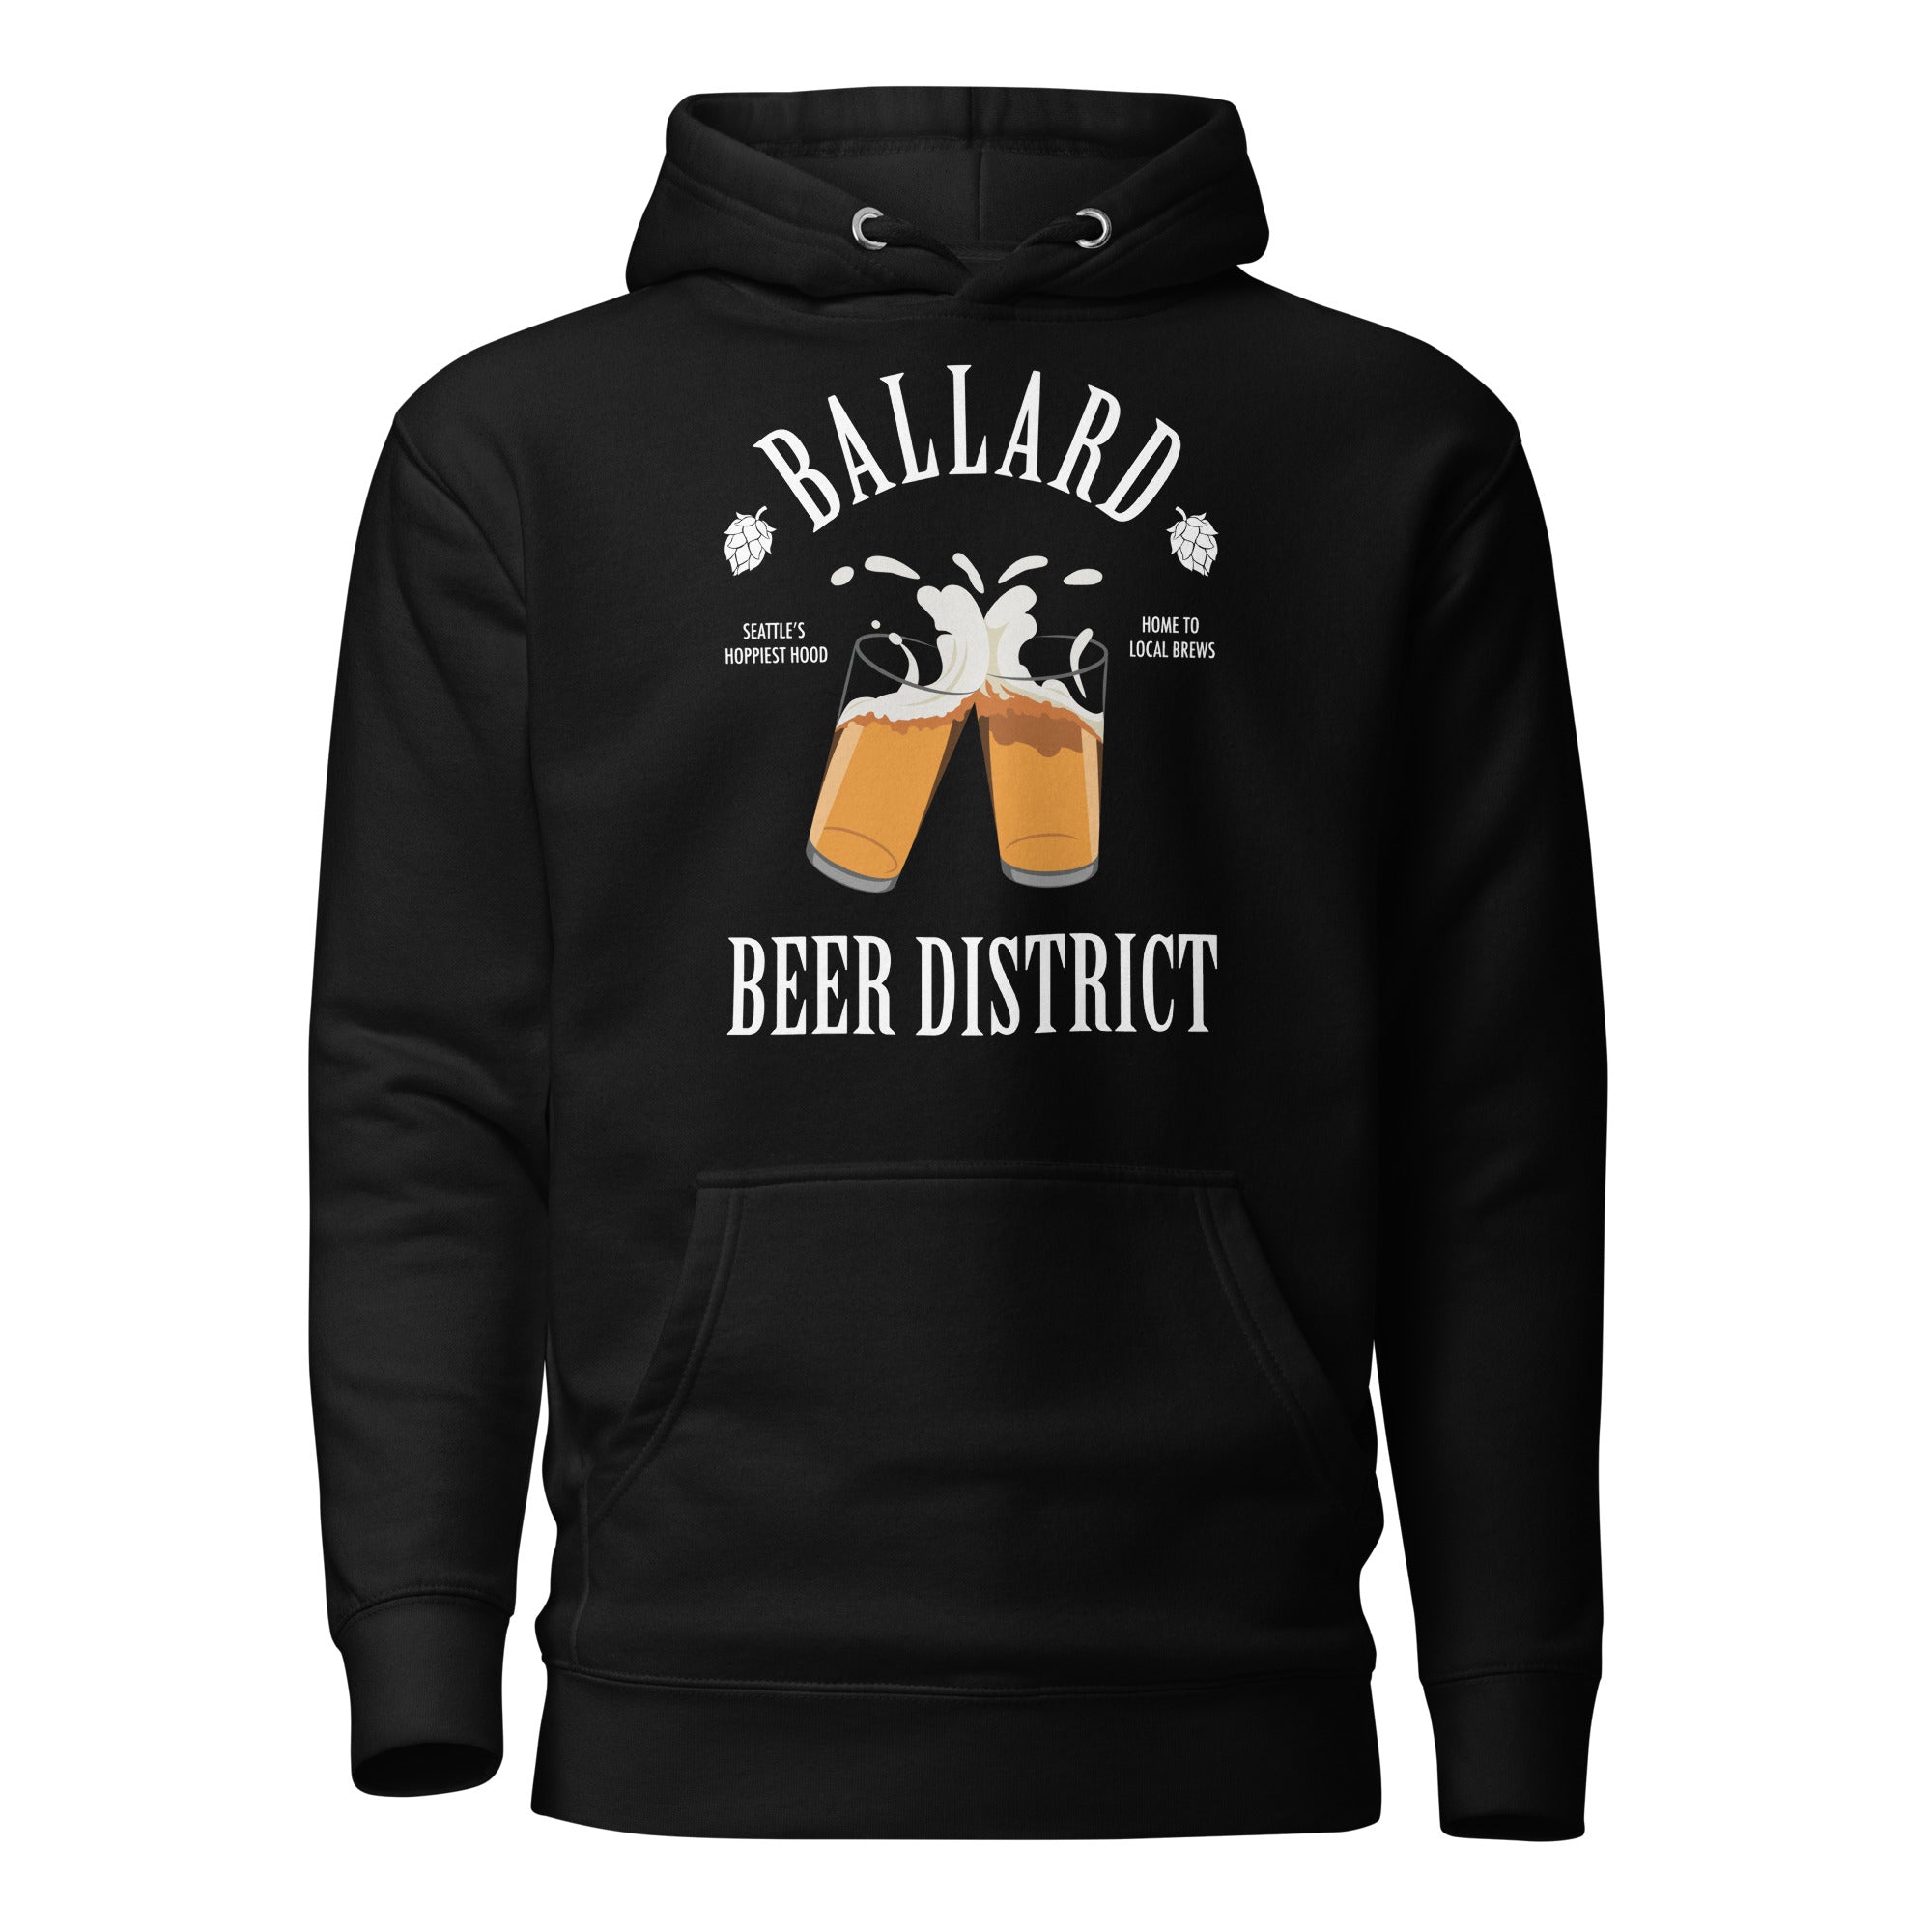 Beer District Hoodie - Ballard | Seattle, WA